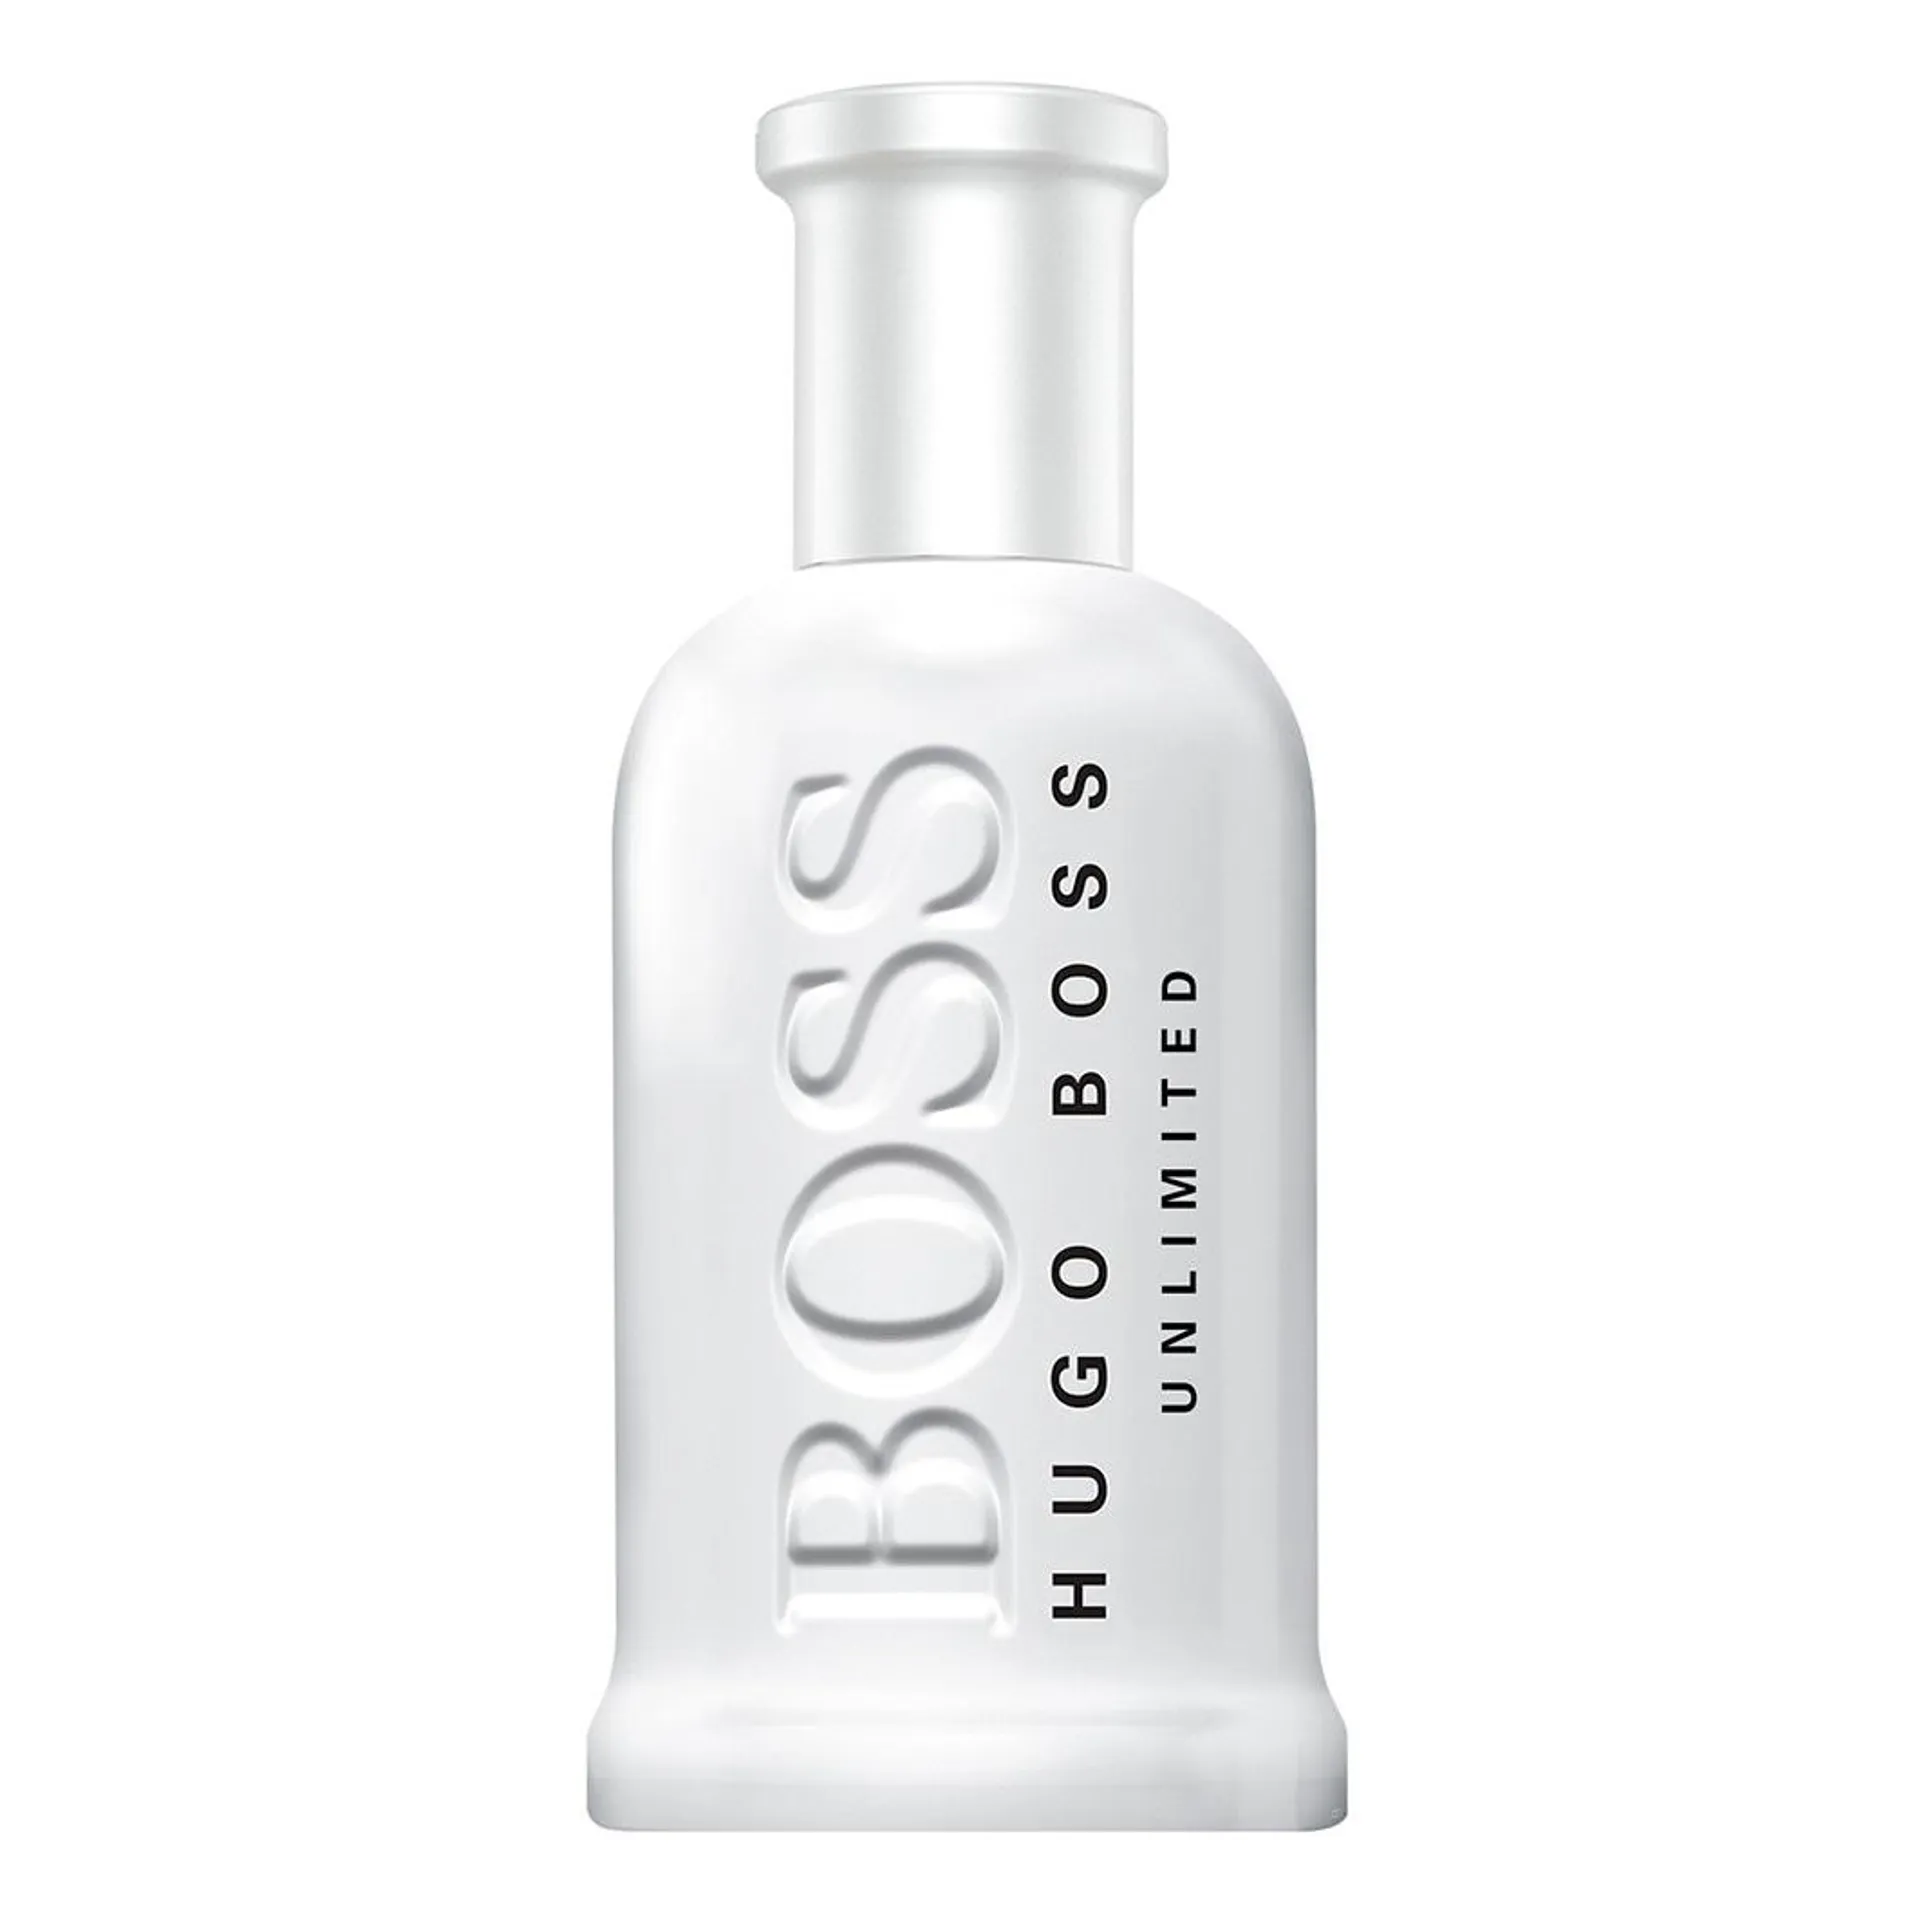 Hugo Boss Boss Bottled Eau de Toilette